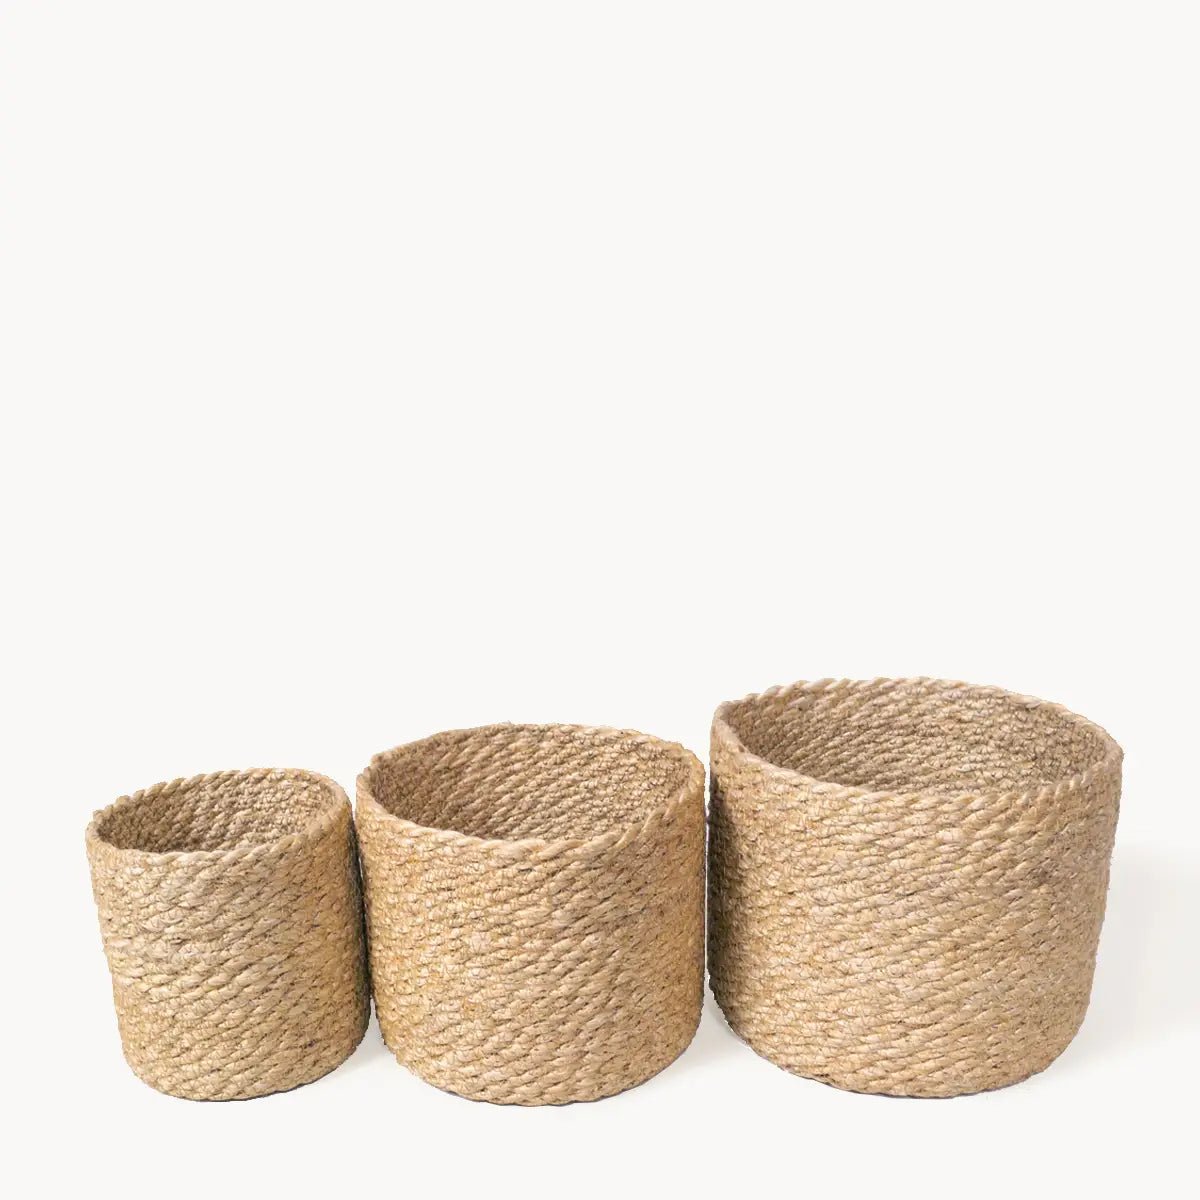 Handwoven Wicker Storage Basket L Kata Bin -Set of 3 - Mindful Living Home